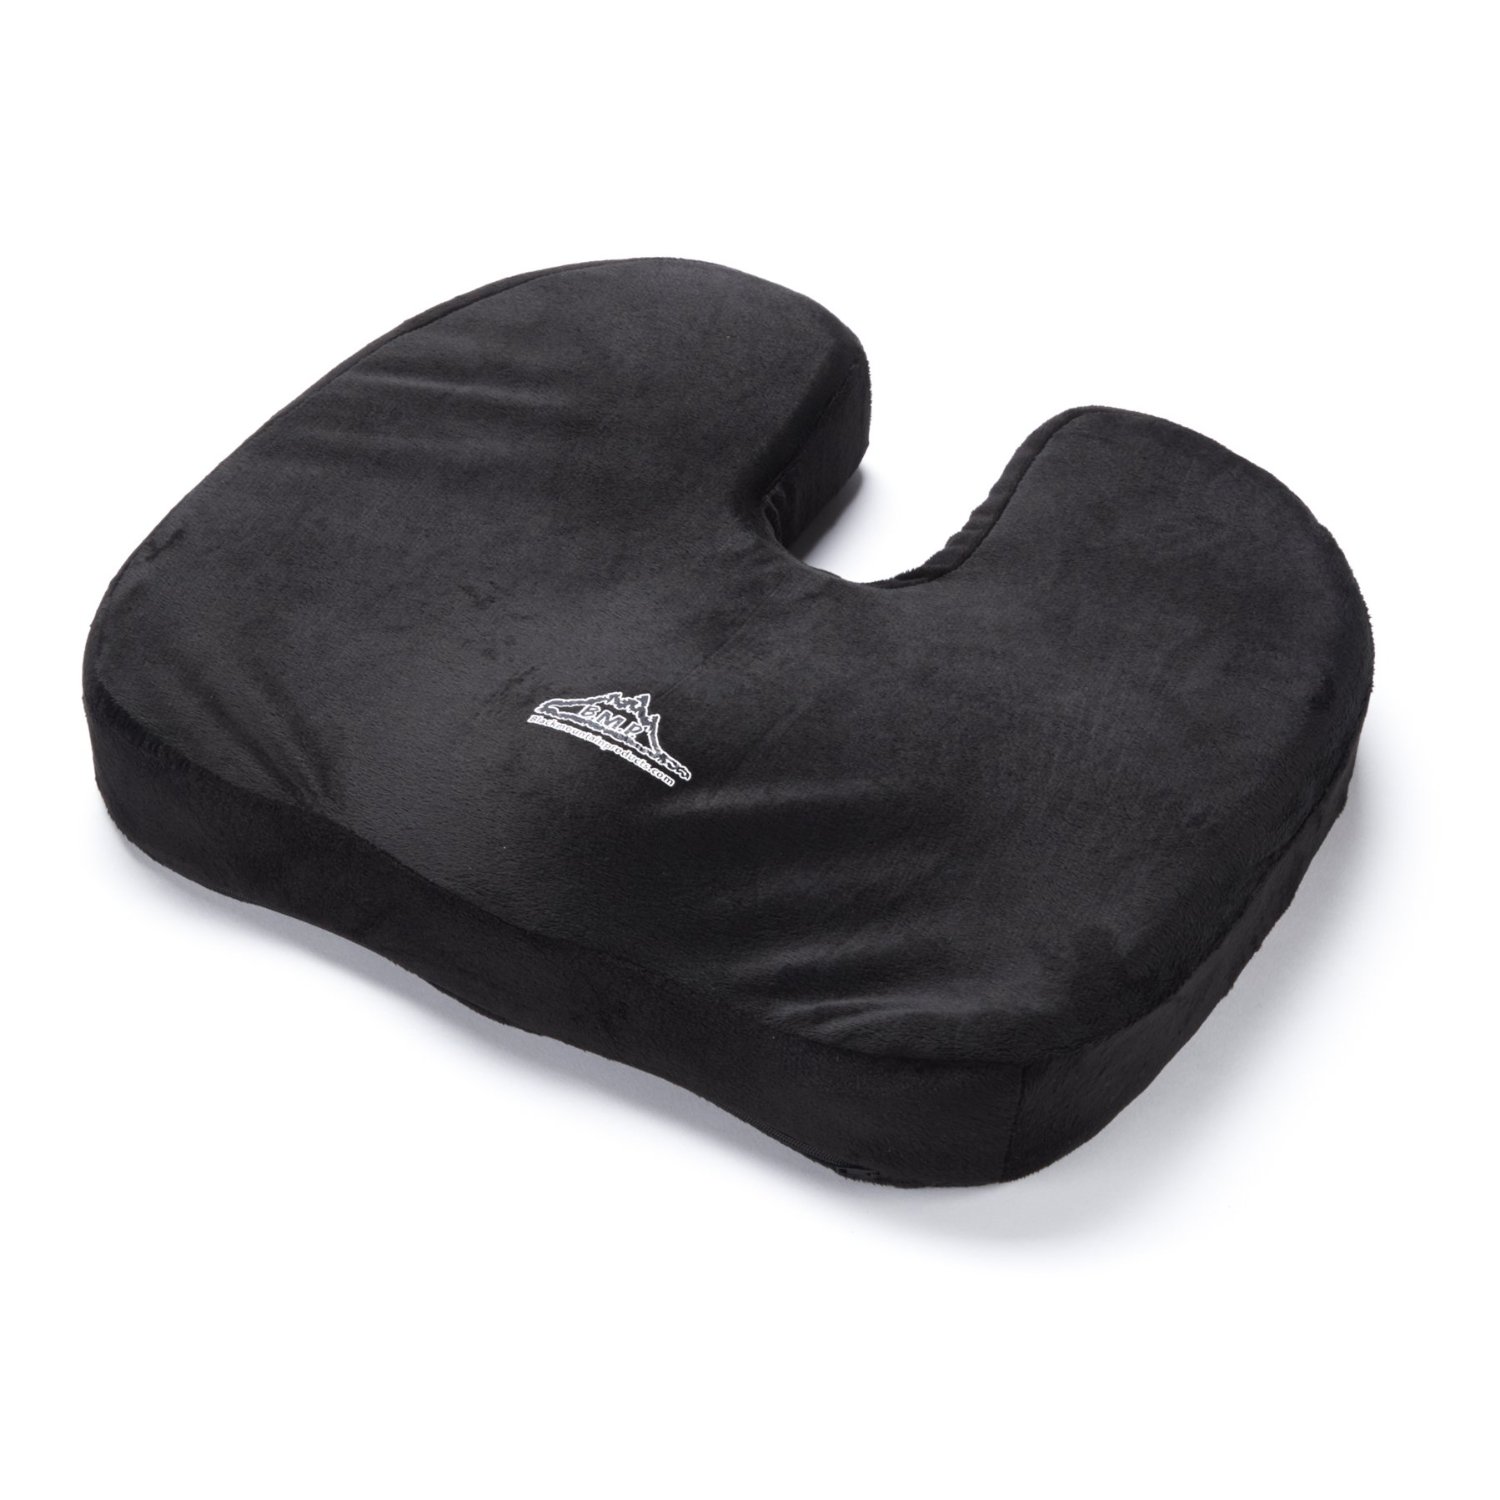 Black Portable Bench Stadium Seat Cushion Pad Wool Blanket Holder w/ Handles 